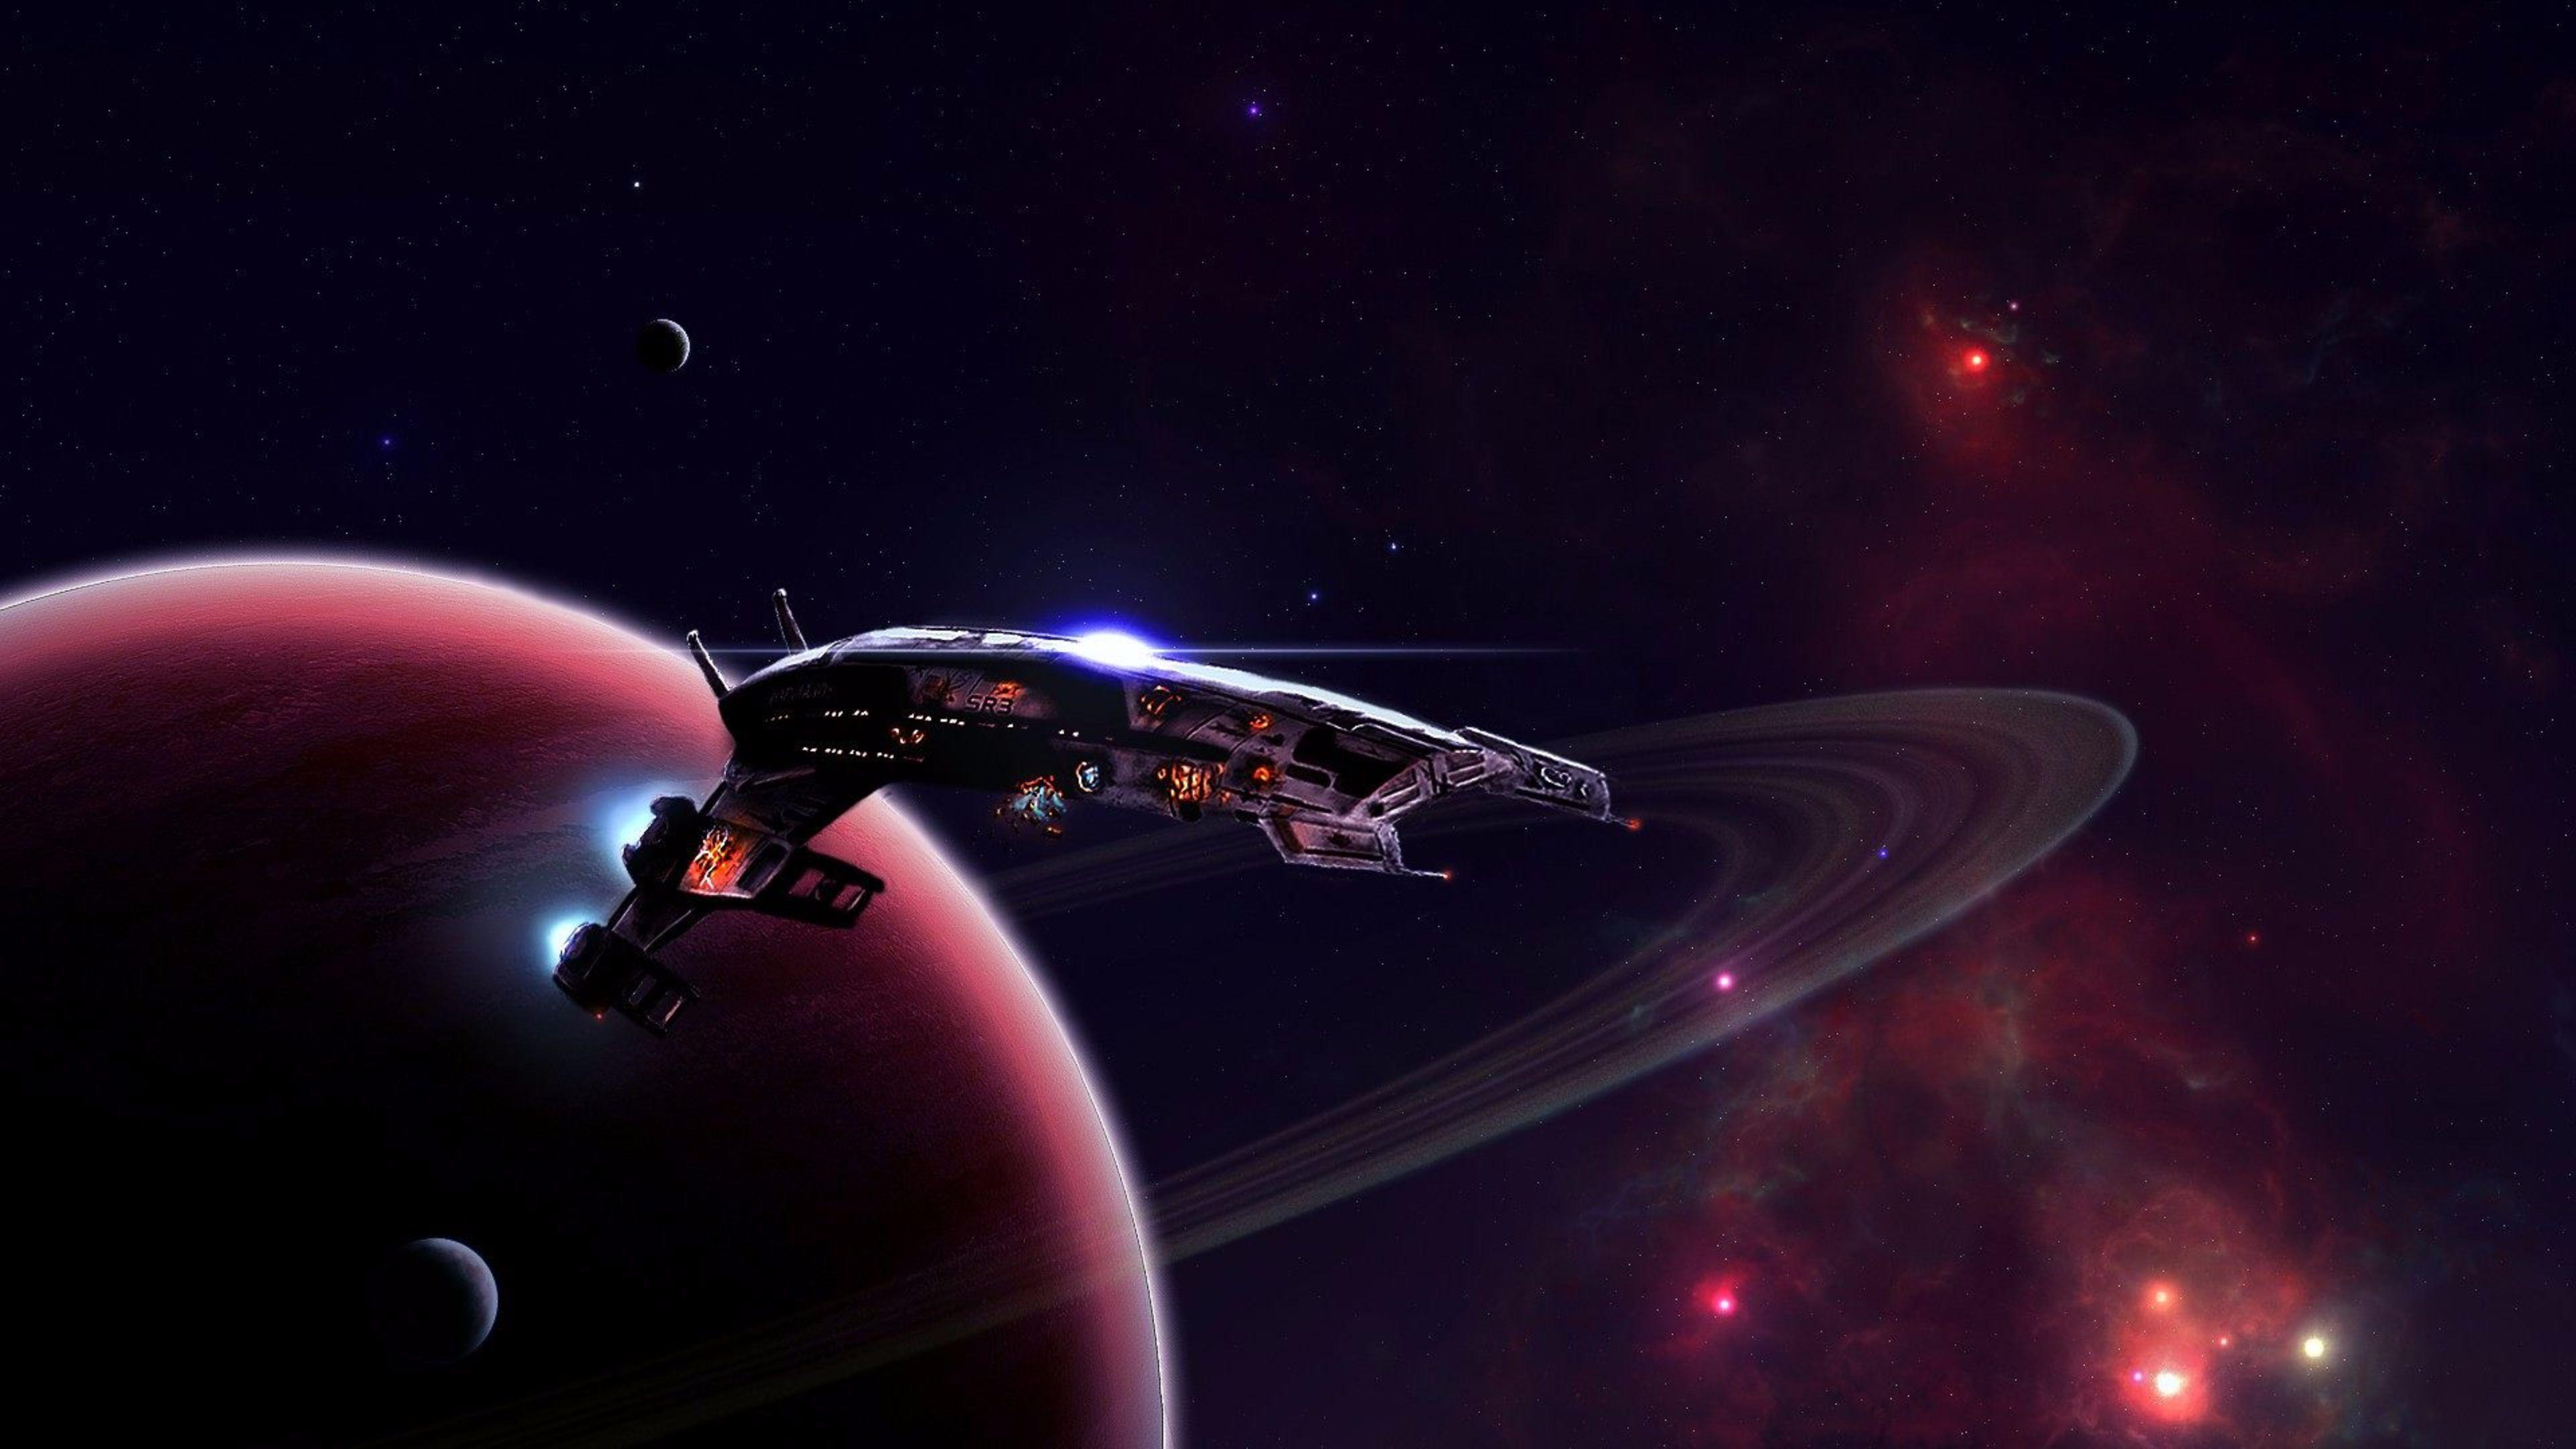 Mass Effect Andromeda Wallpaper Full HD, Game Wallpaper